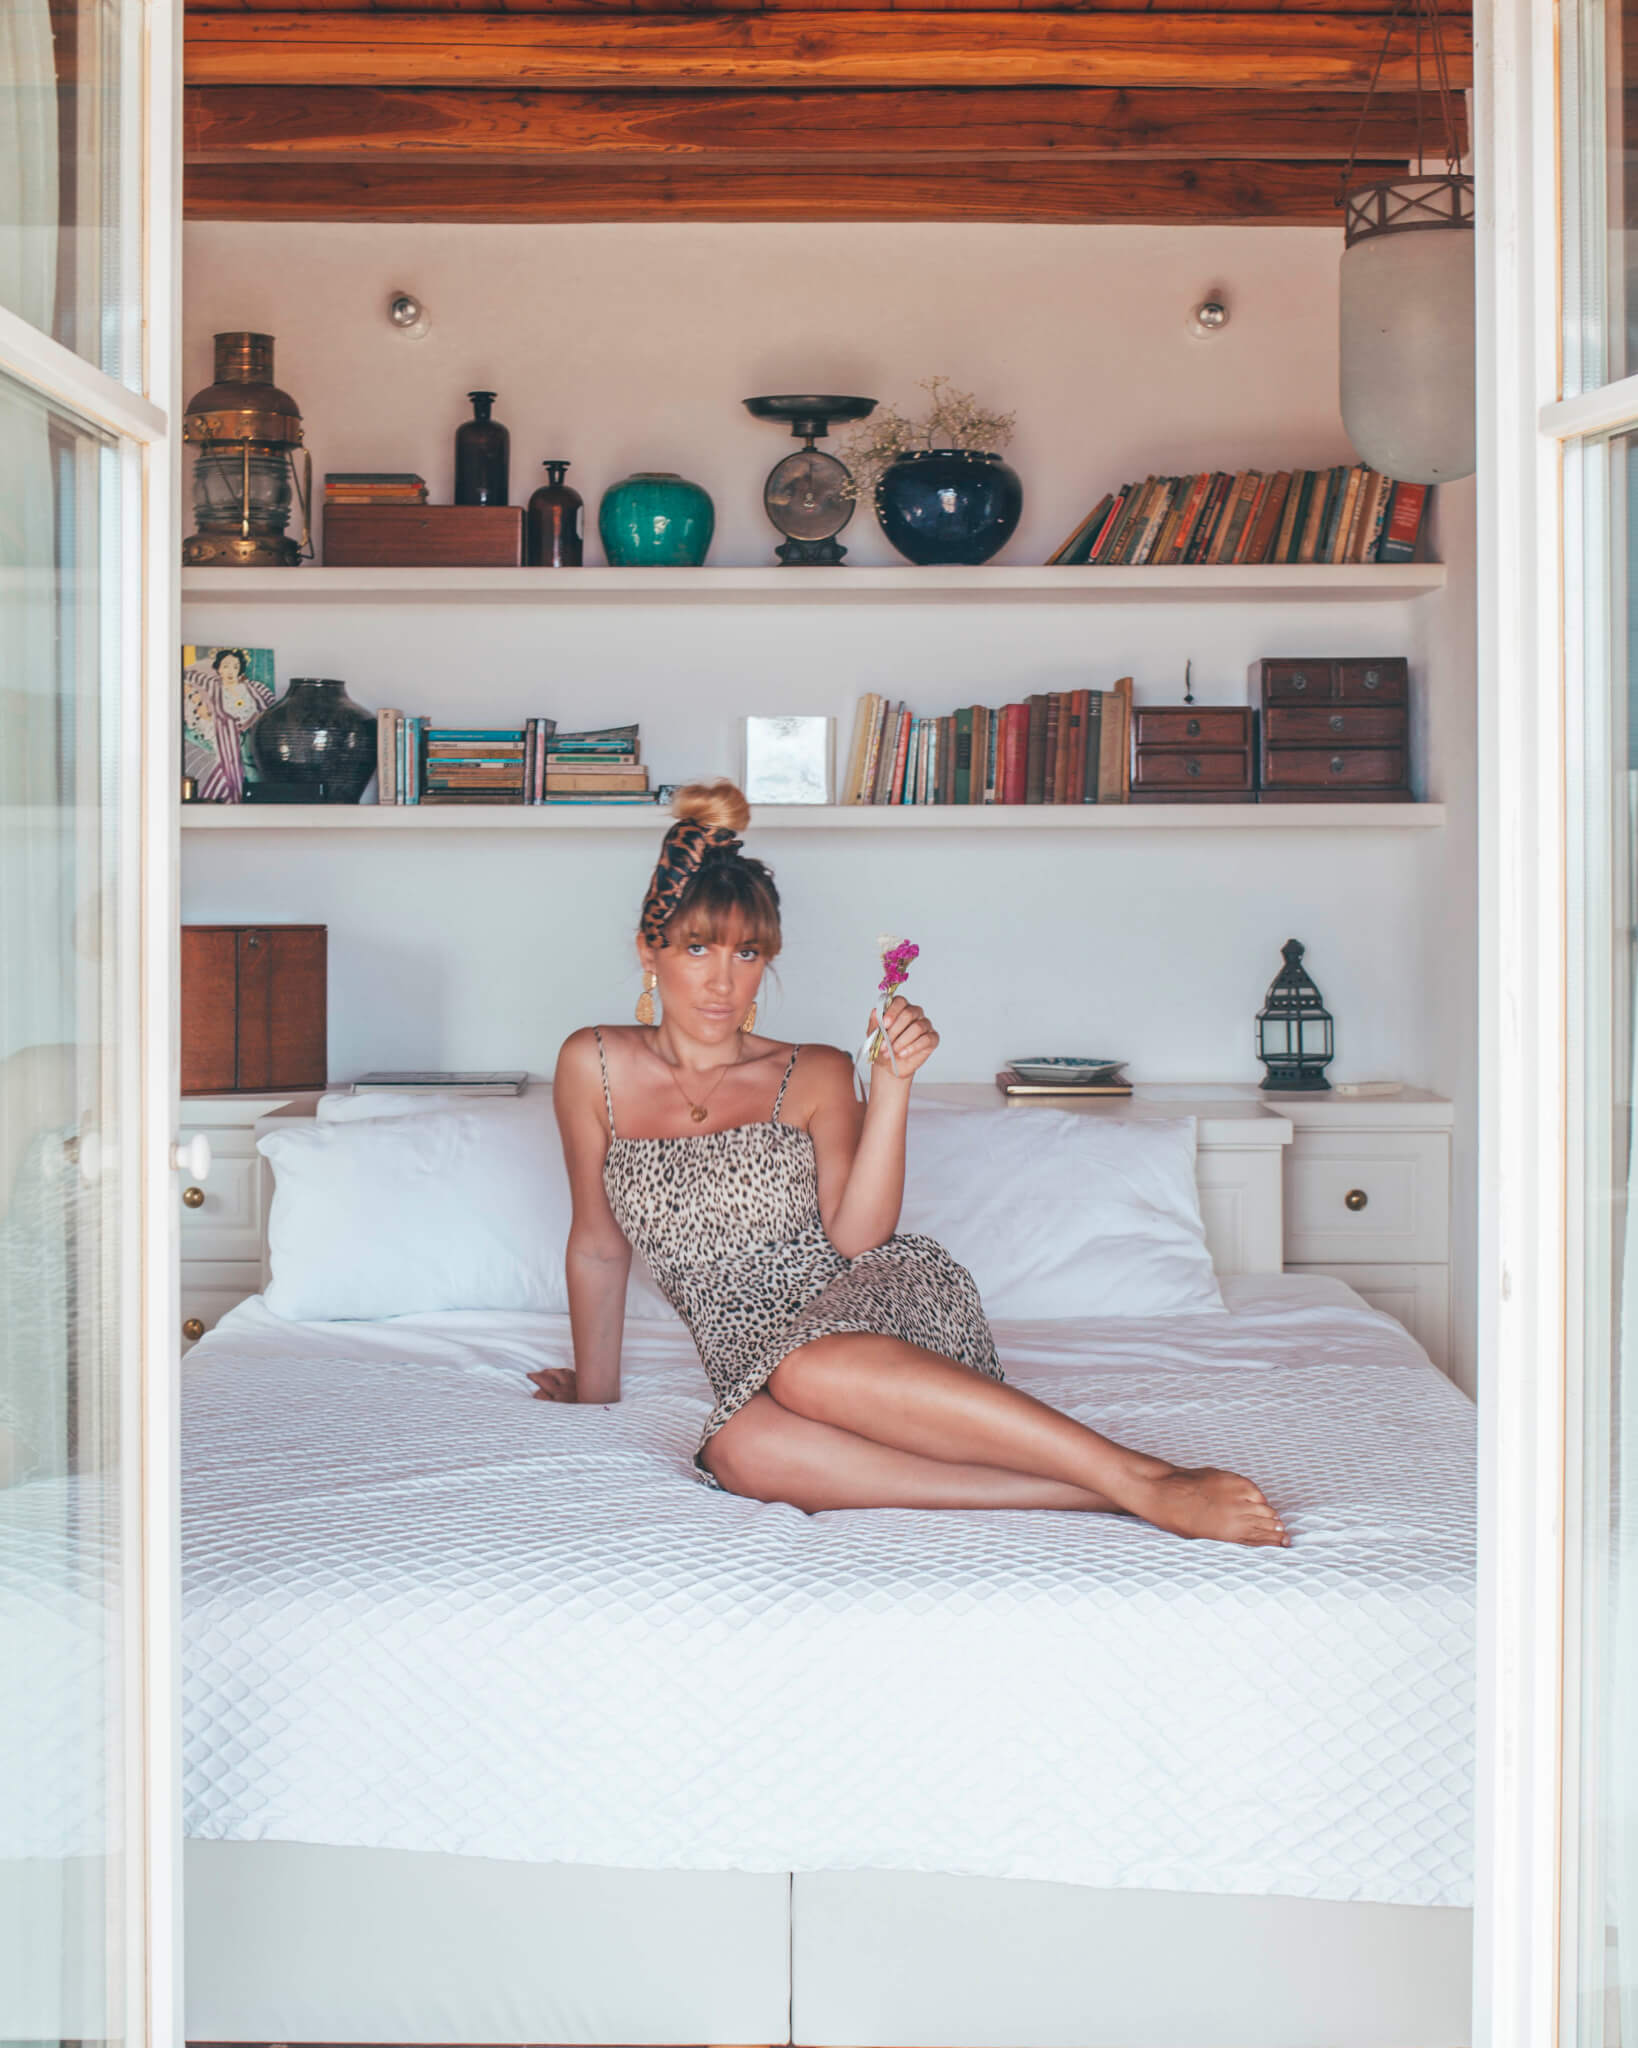 Dolce-Vita-Instagram-3-of-9 Our Stay at Mykonos Luxury Villa Dolce Vita